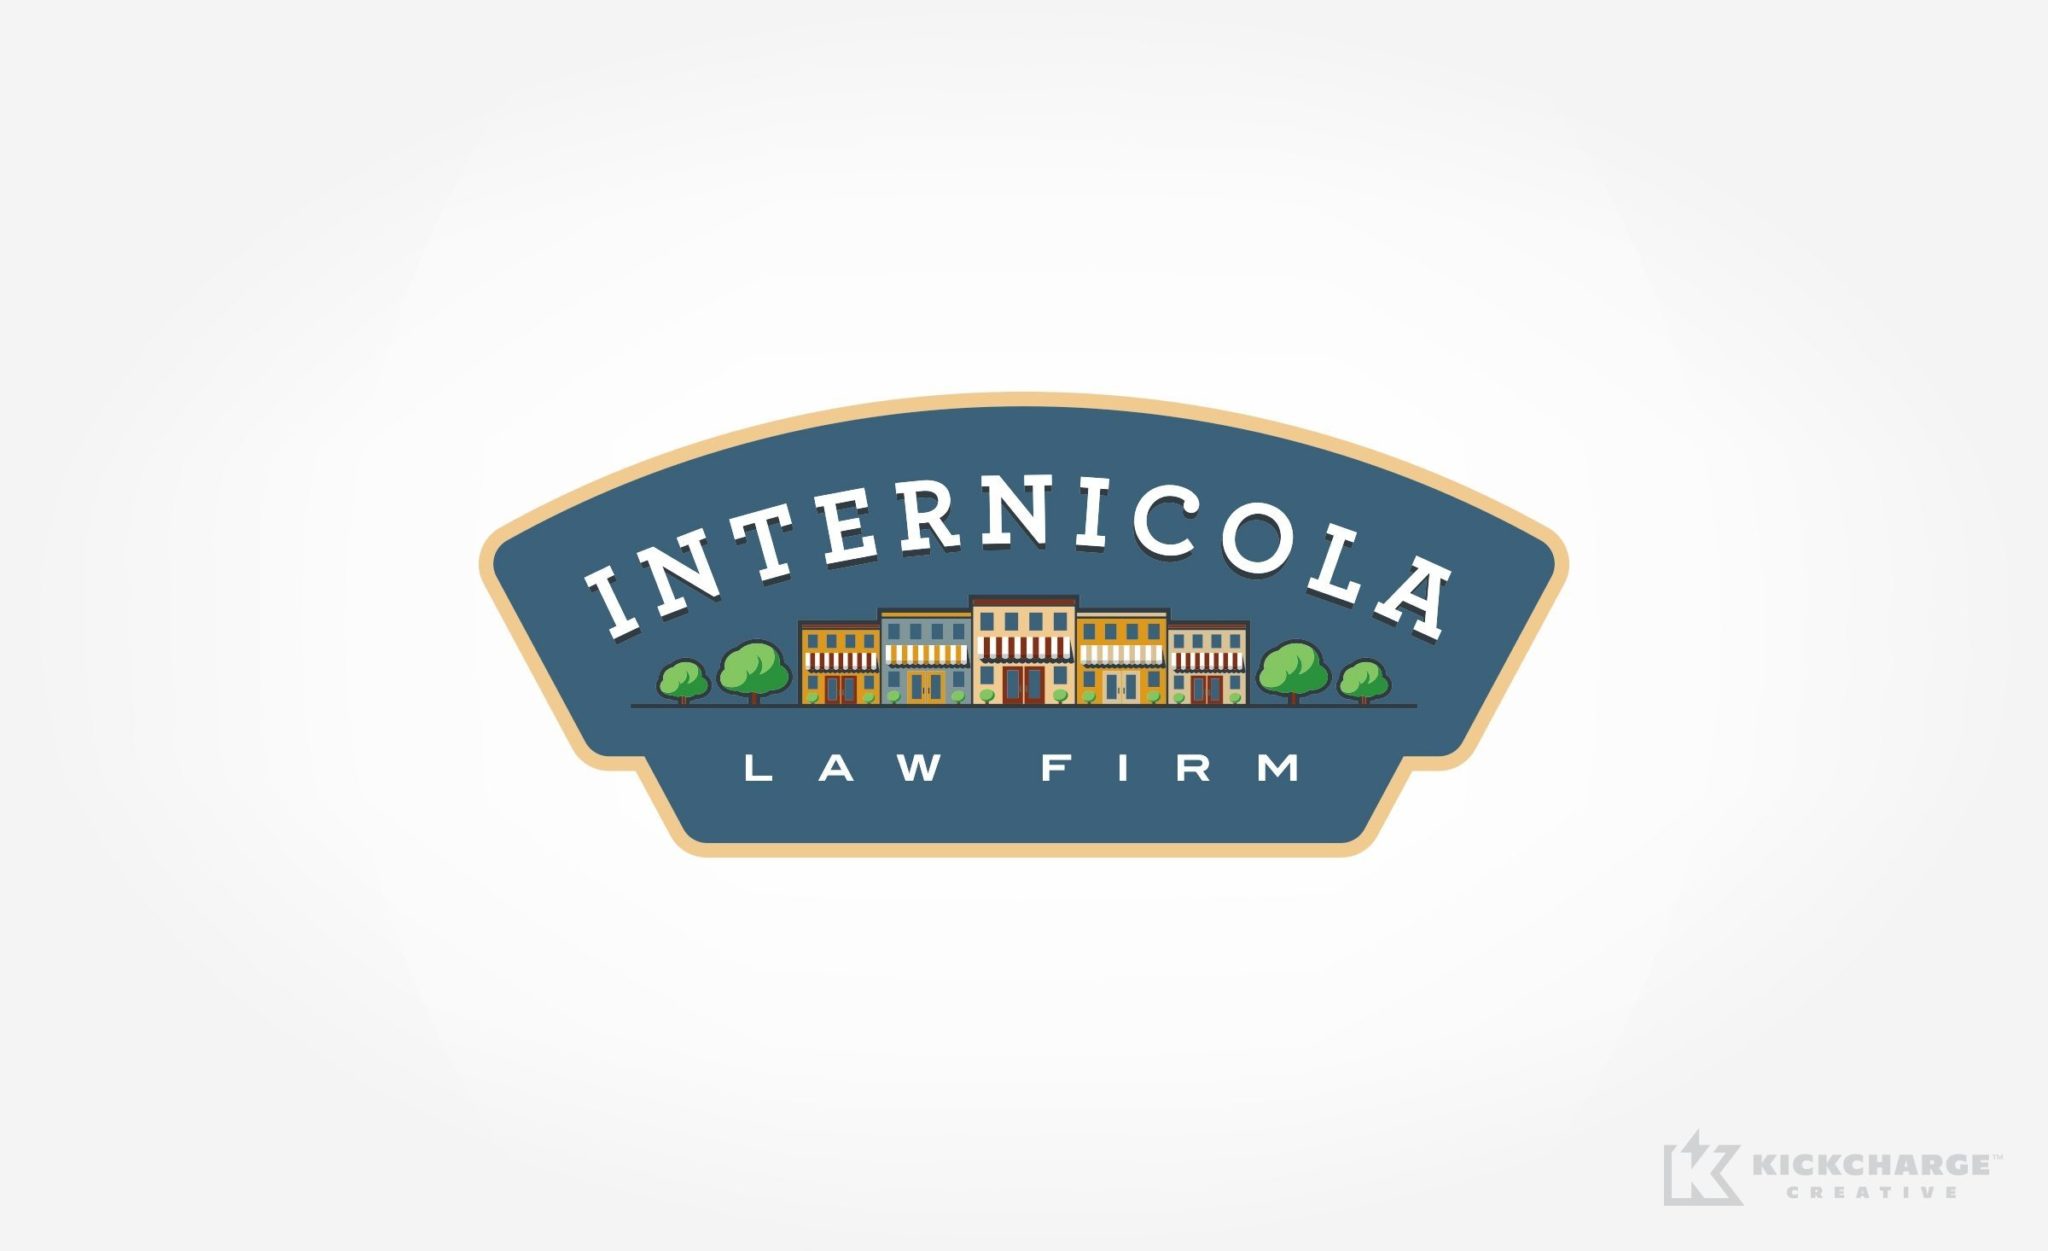 Internicola Law Firm